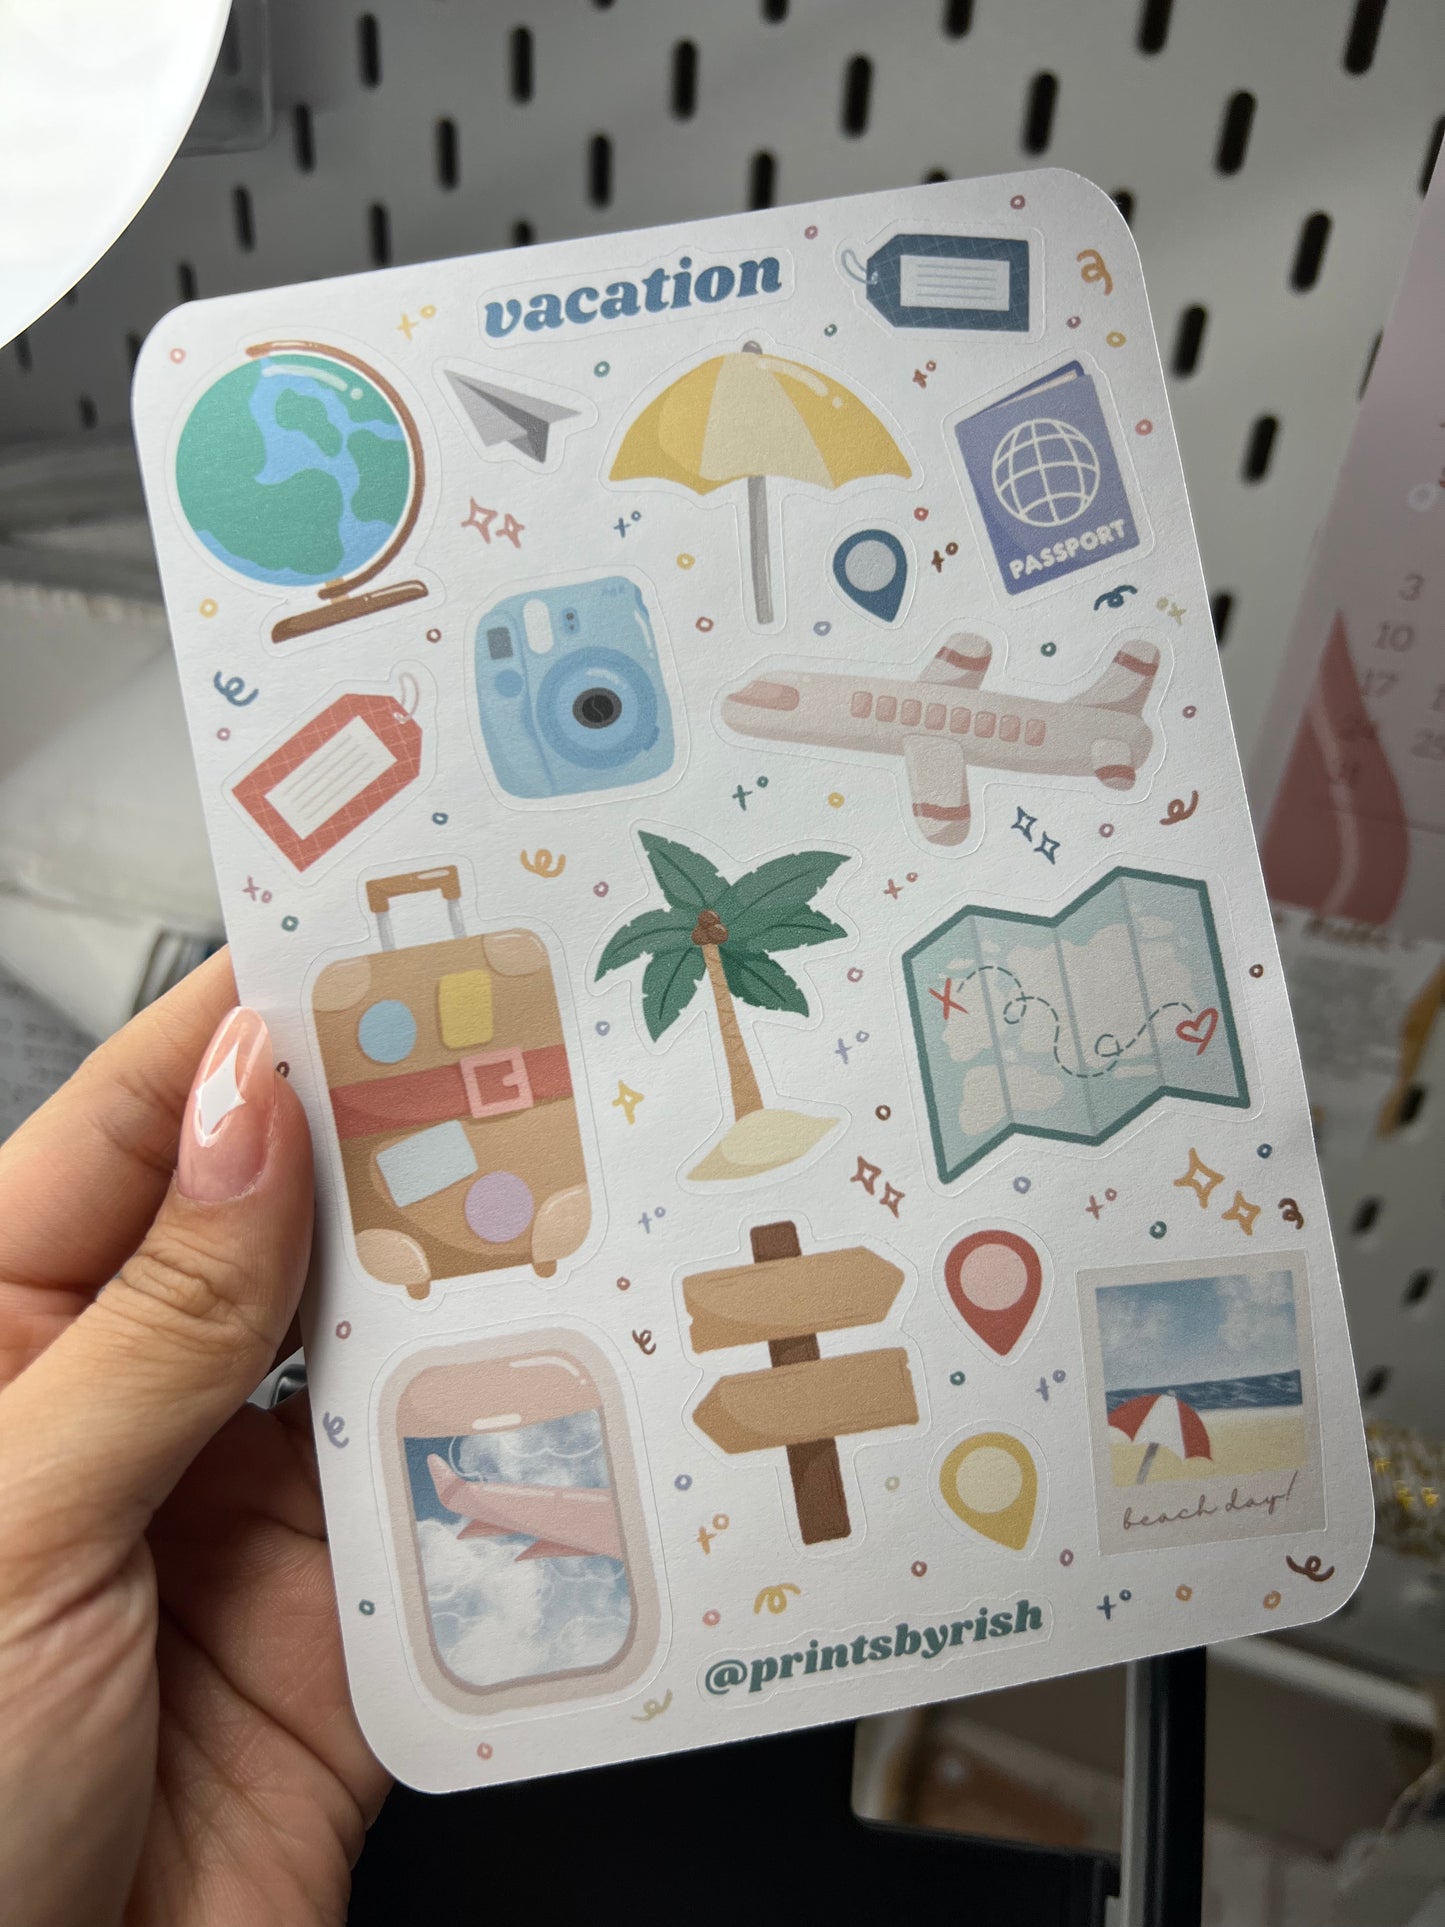 Vacation Sticker Sheet